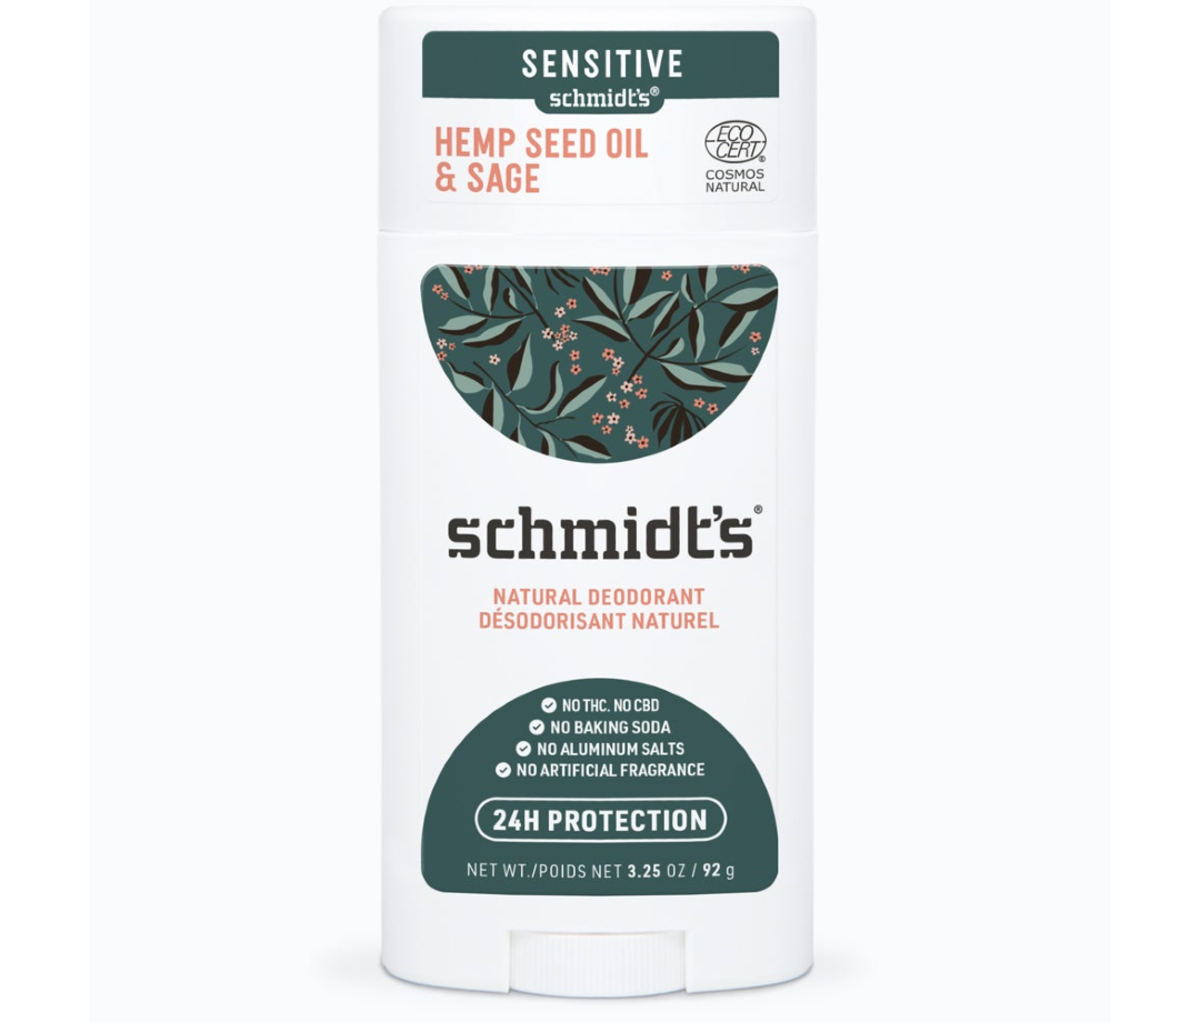 Schmidt's Sensitive Skin Natural Deodorant, Hemp & Sage